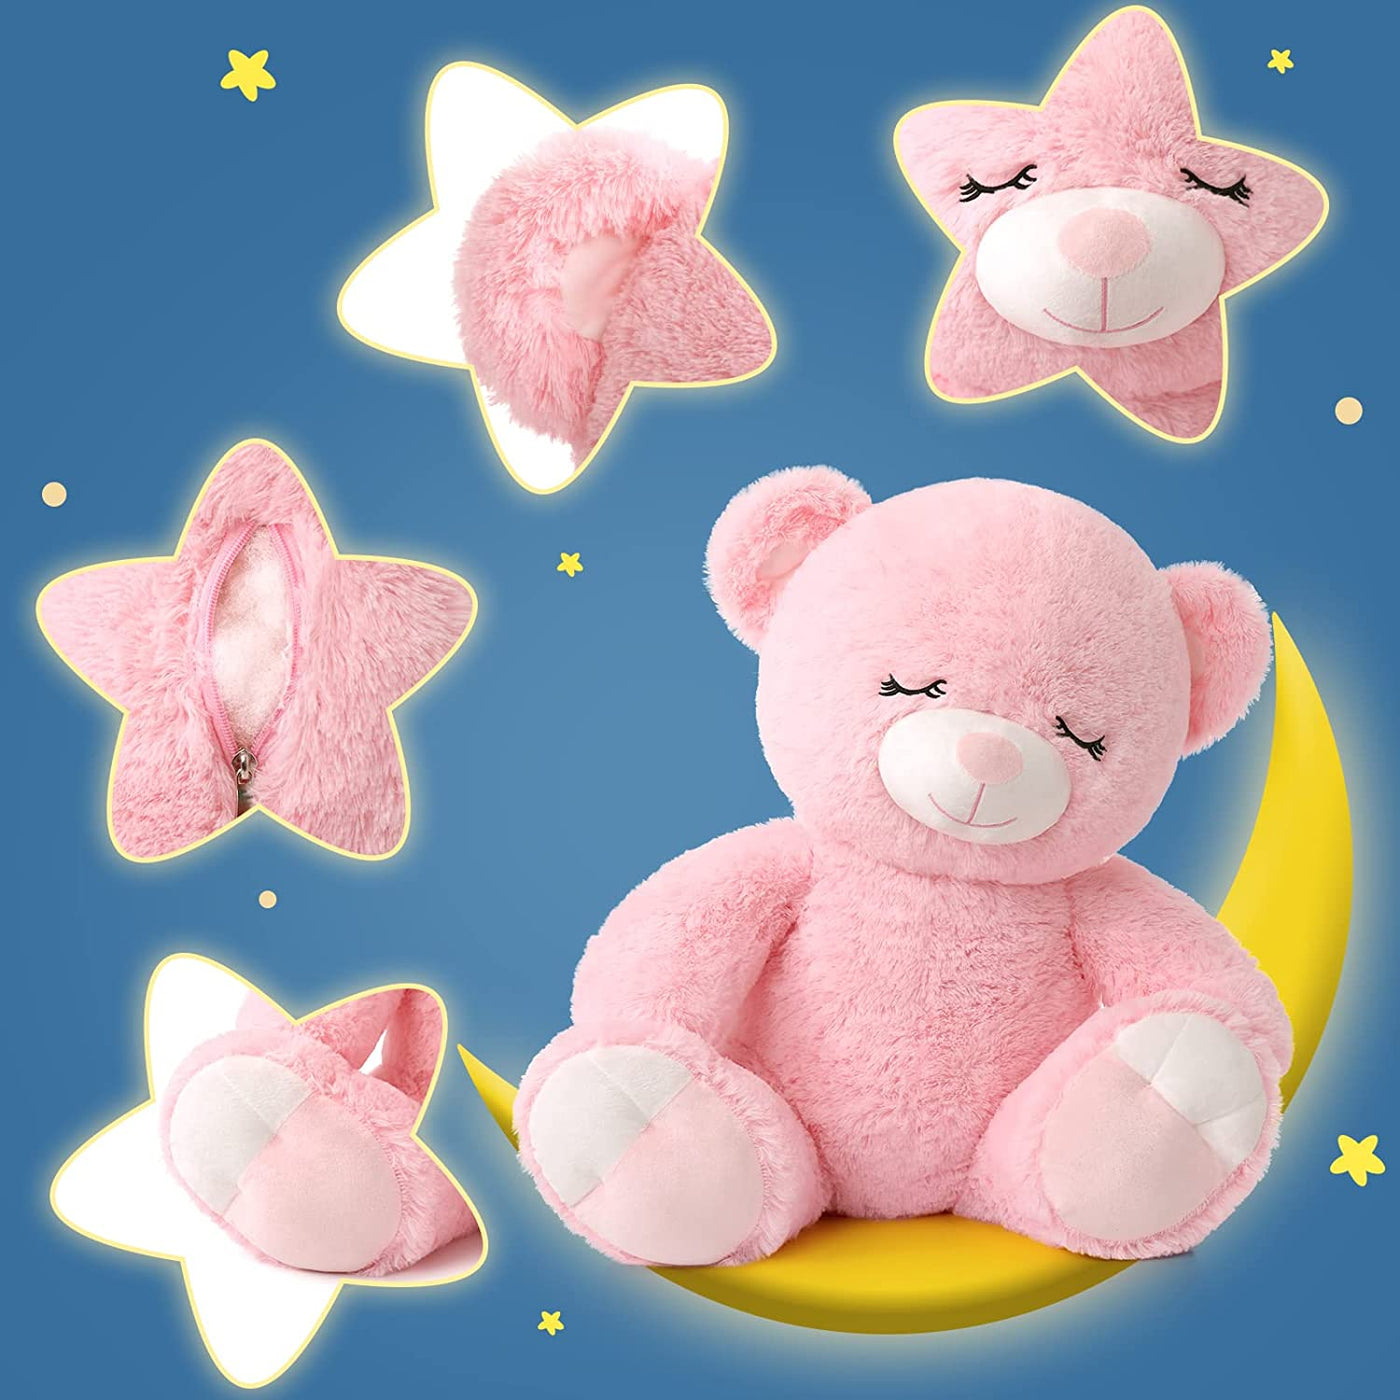 Teddy Bear Stuffed Animal, Pink/Brown, 23.6 Inches